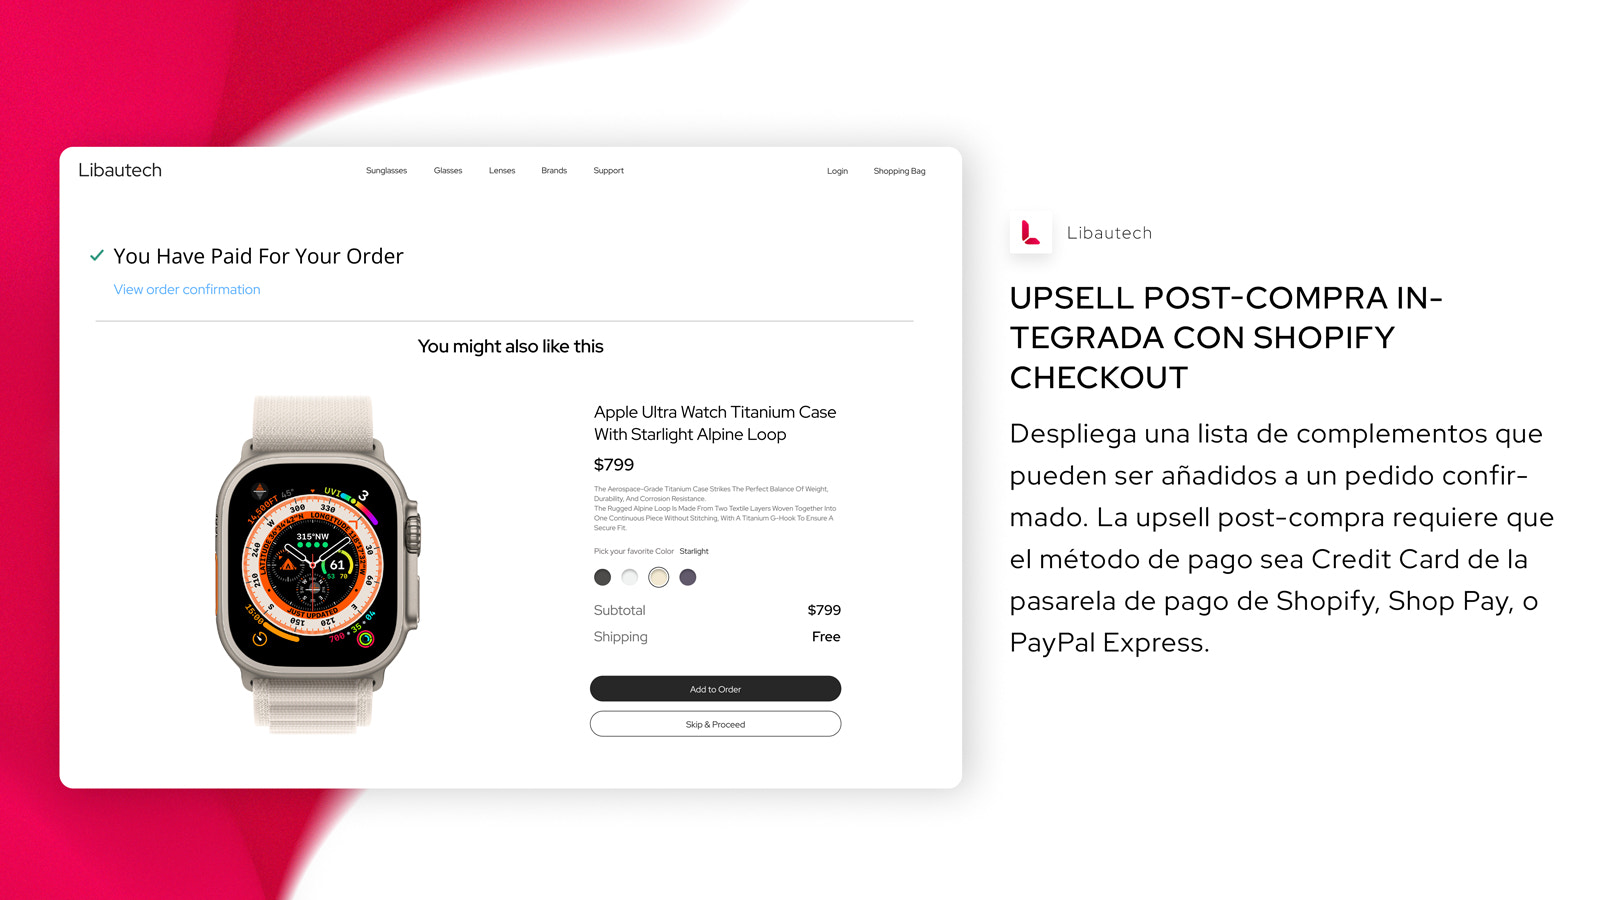 Upsell post-compra integrada con Shopify Checkout